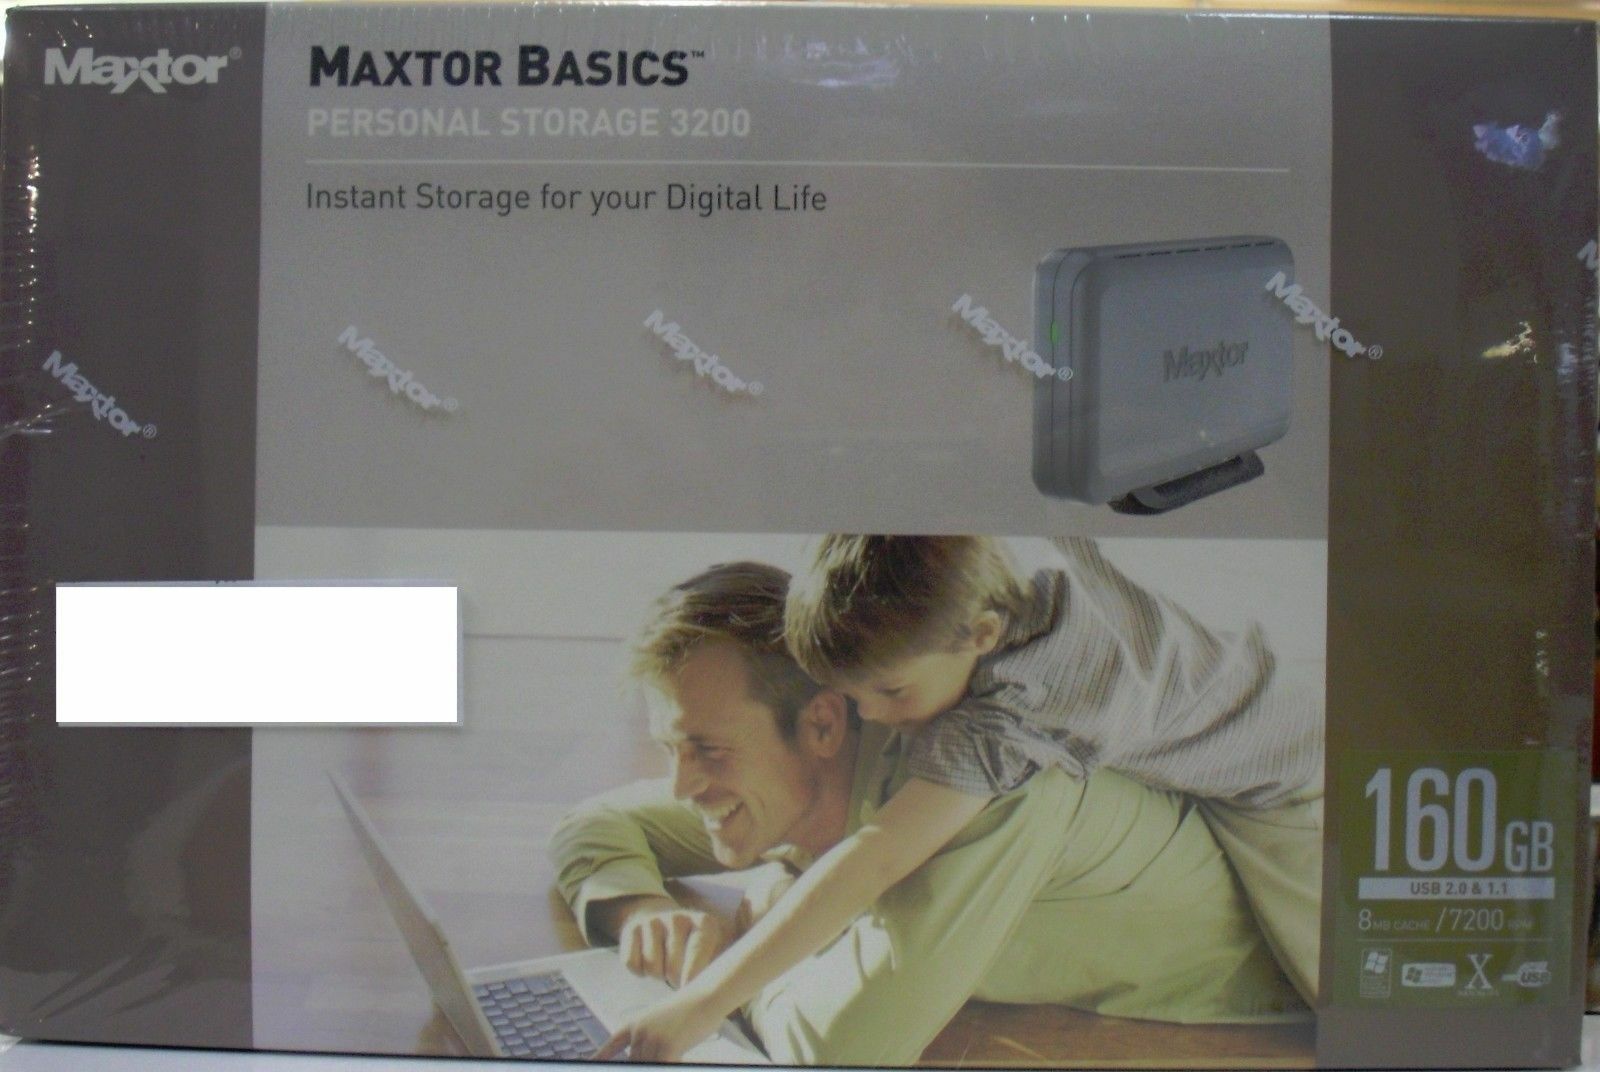 Maxtor basics personal storage 3200